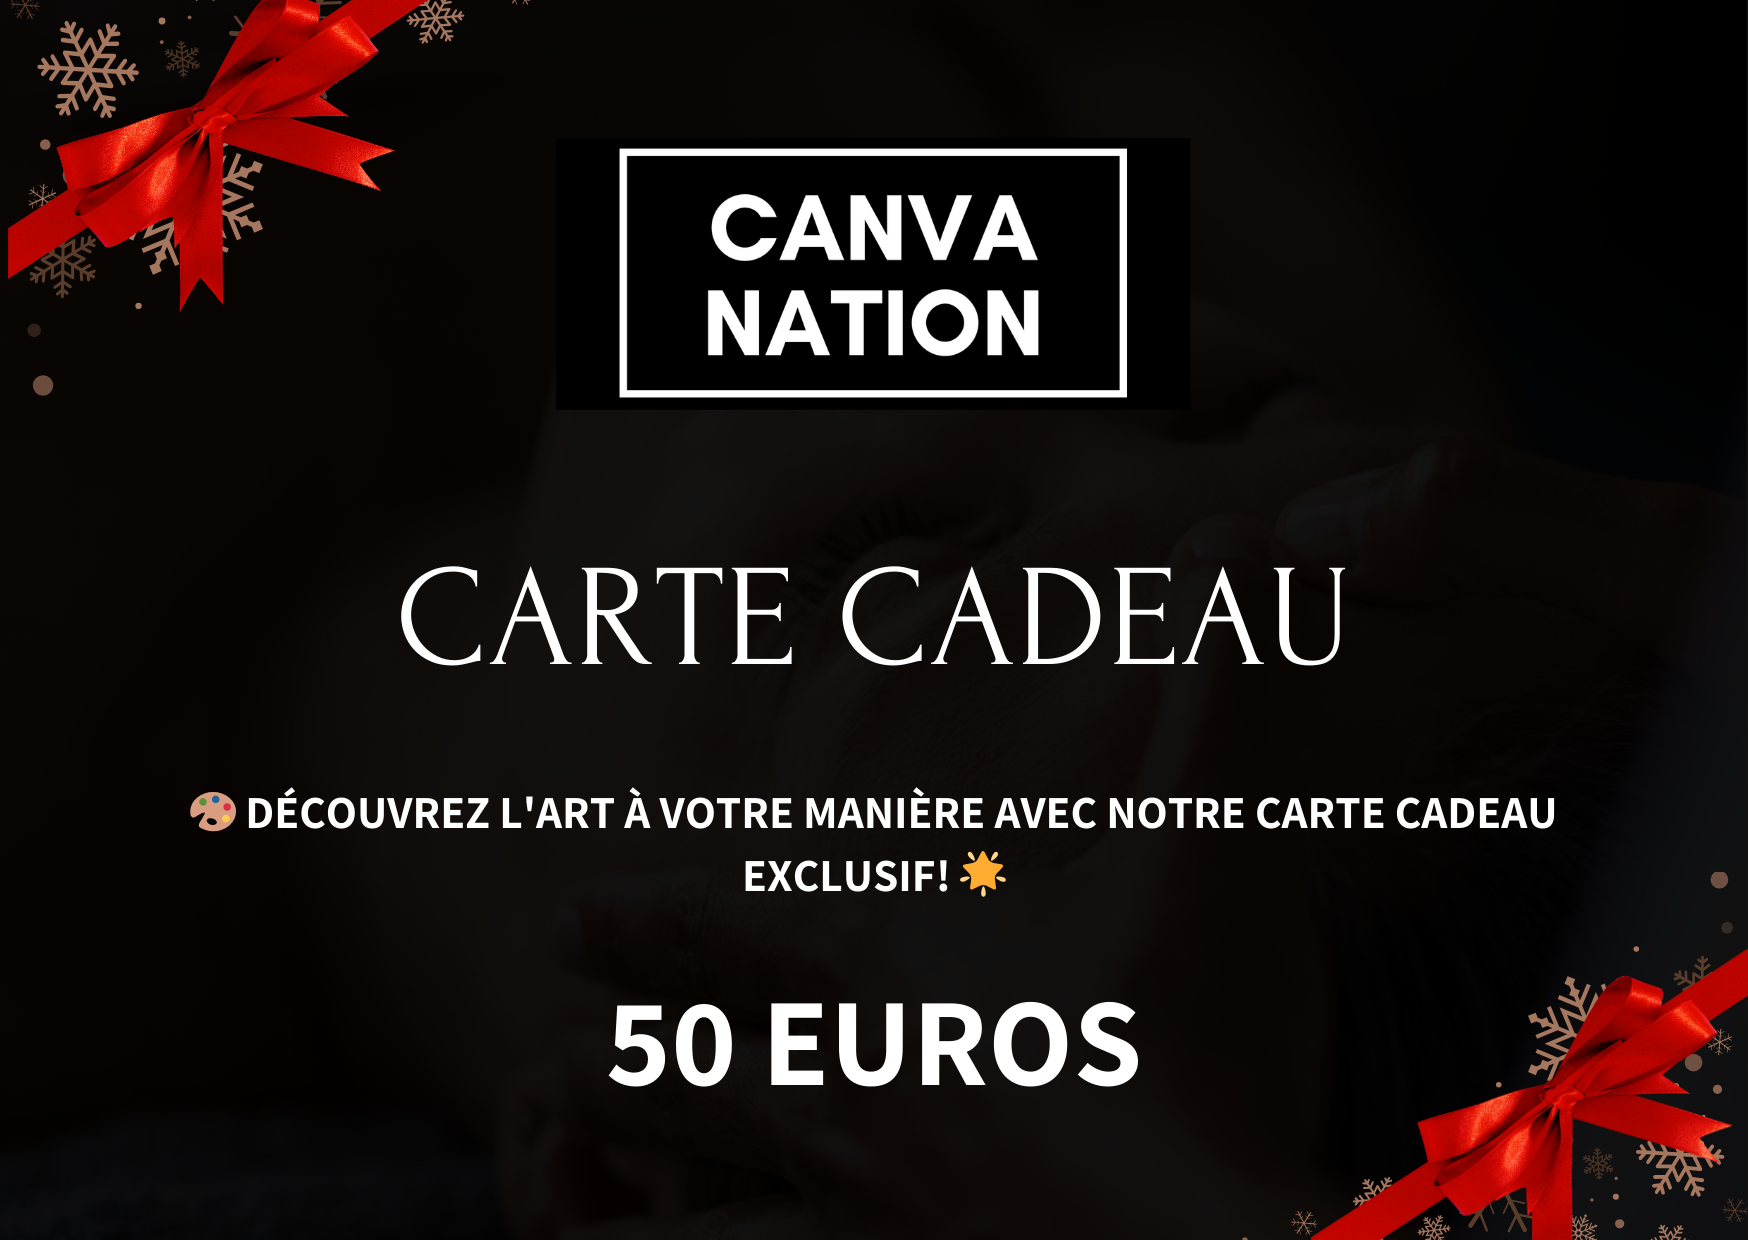 Carte Cadeau Canvanation Canvanation